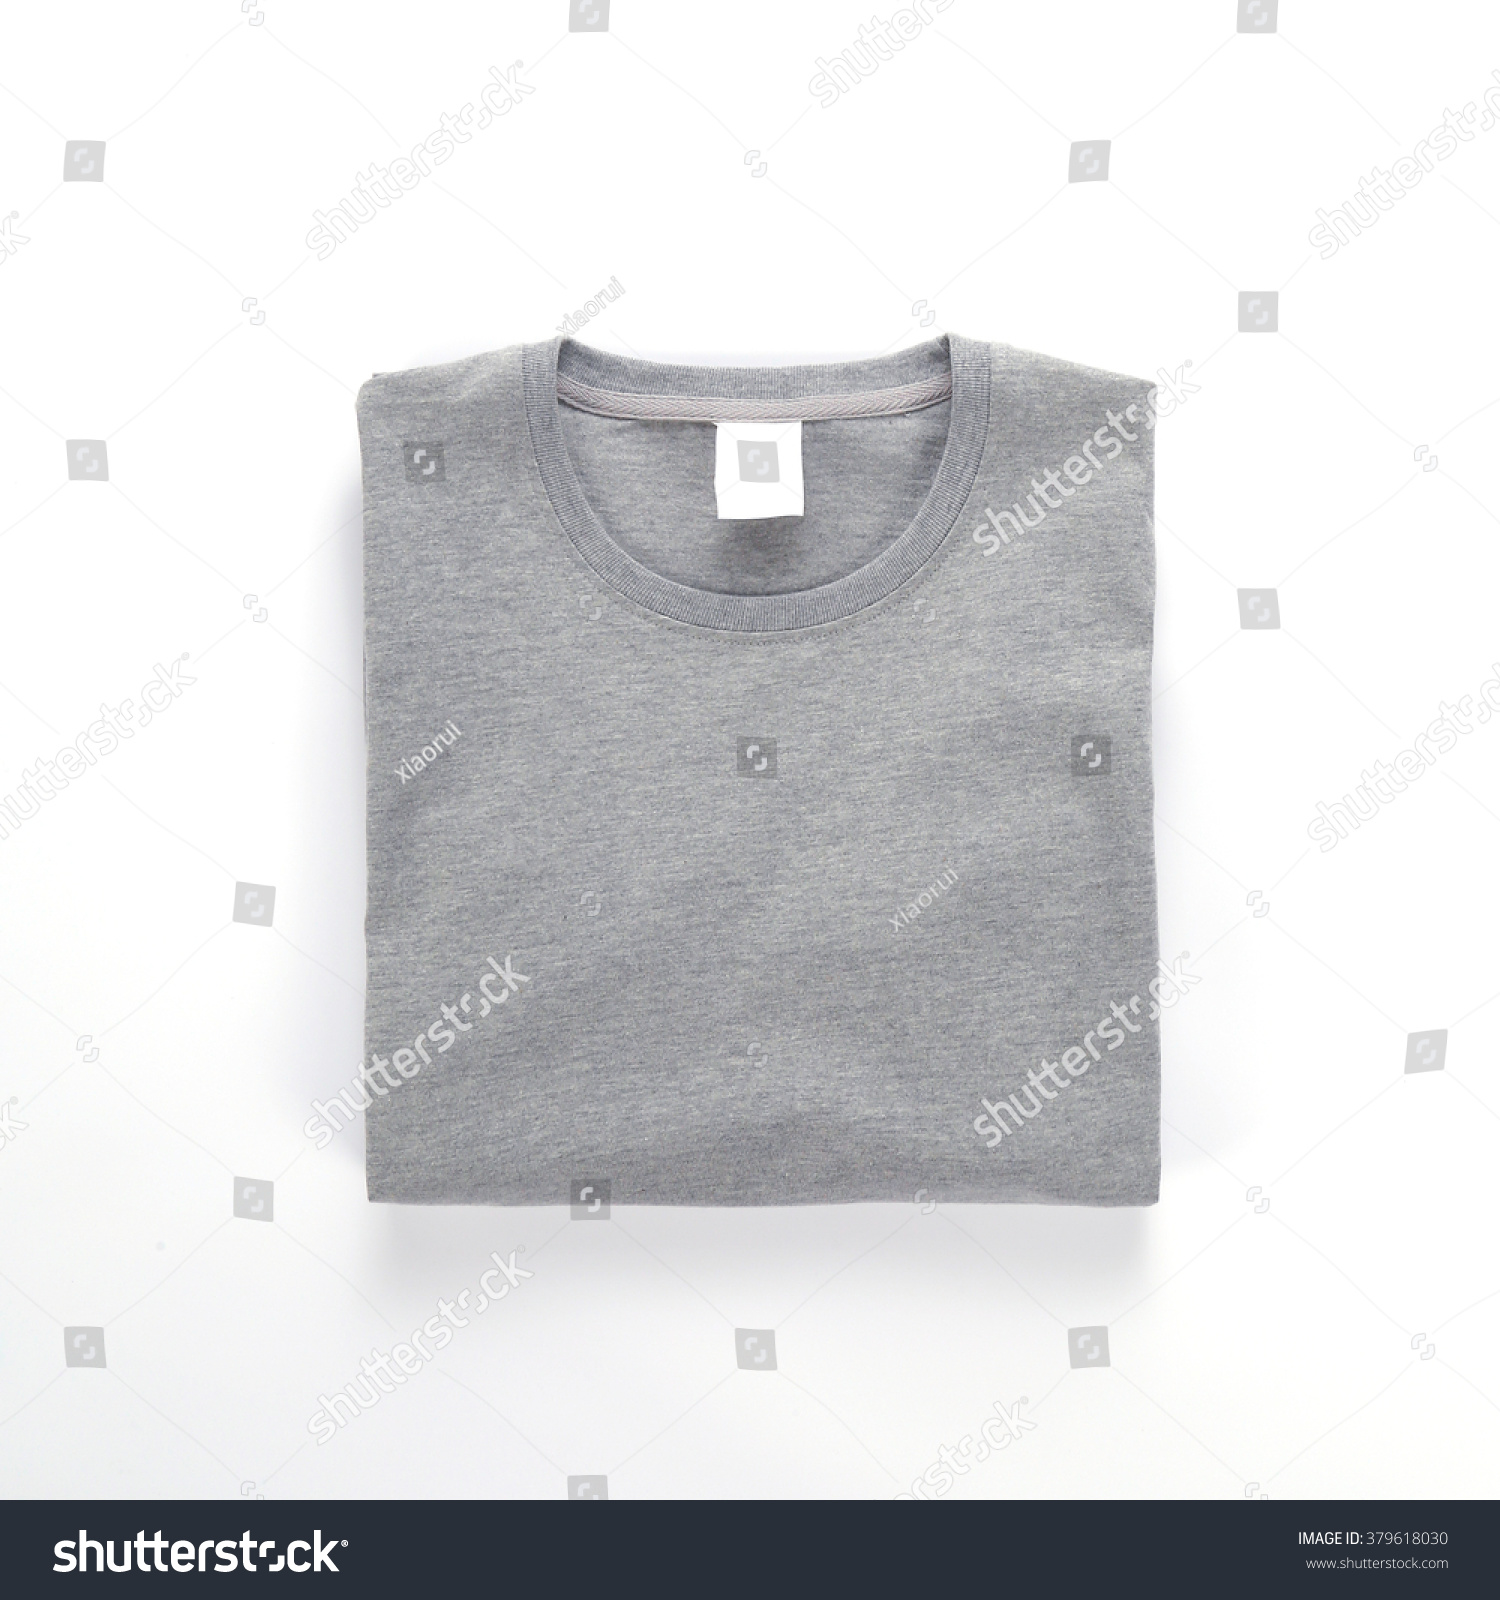 Grey T-shirt #379618030